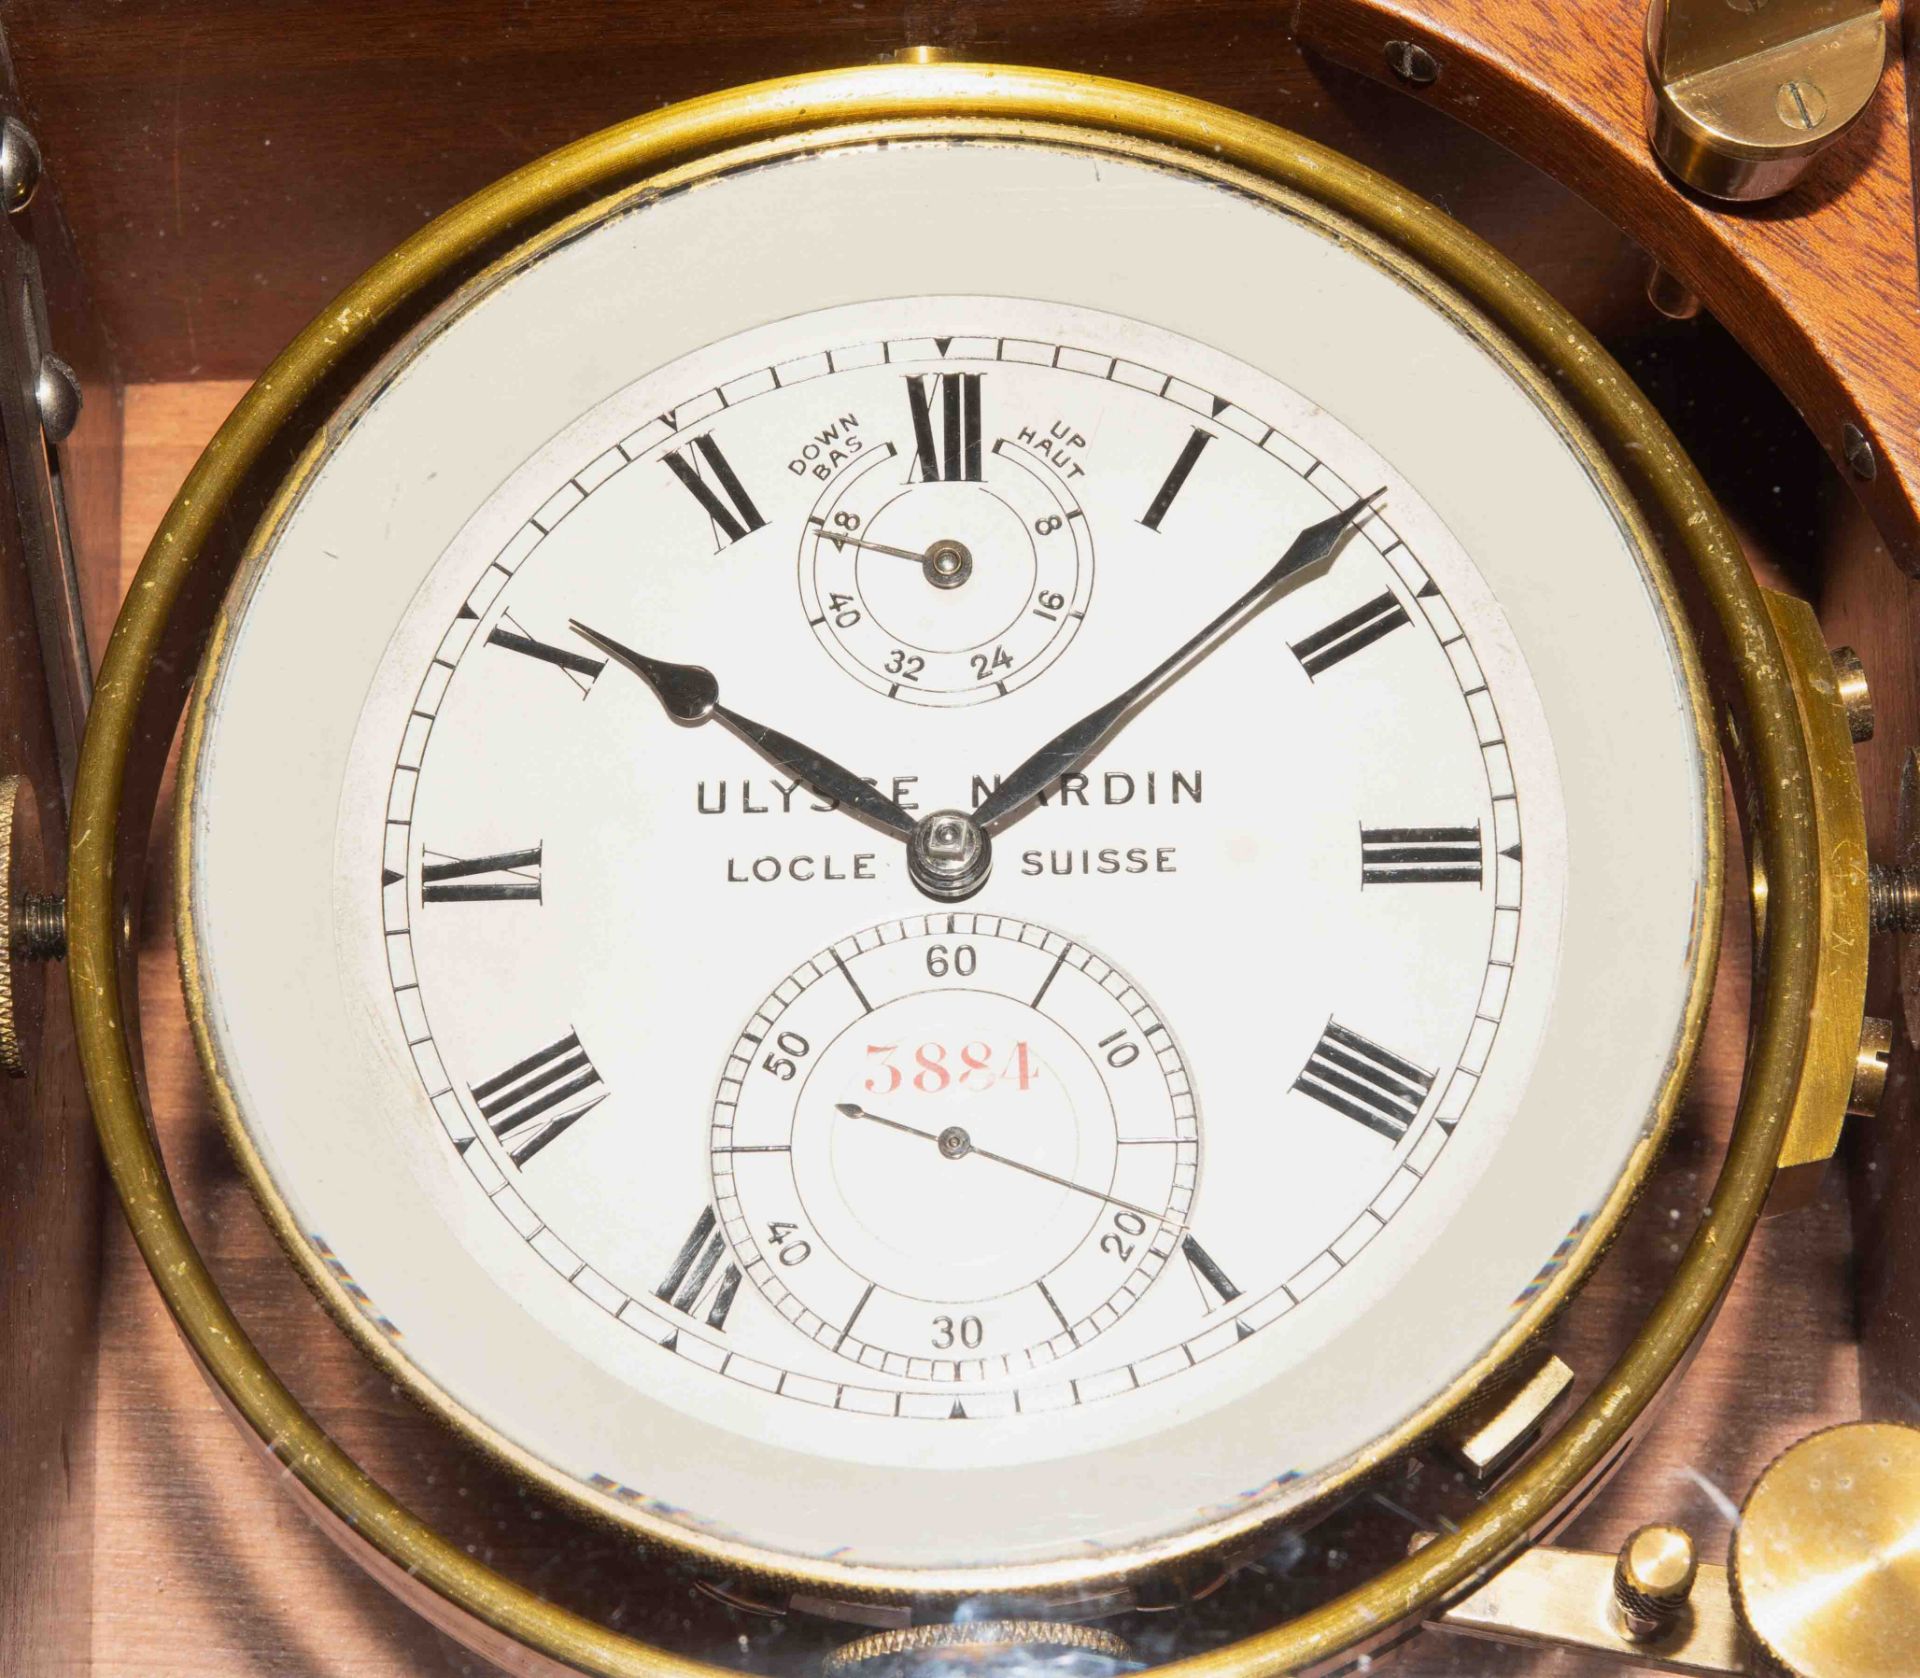 Schiffschronometer "Ulysse-Nardin" - Image 8 of 9